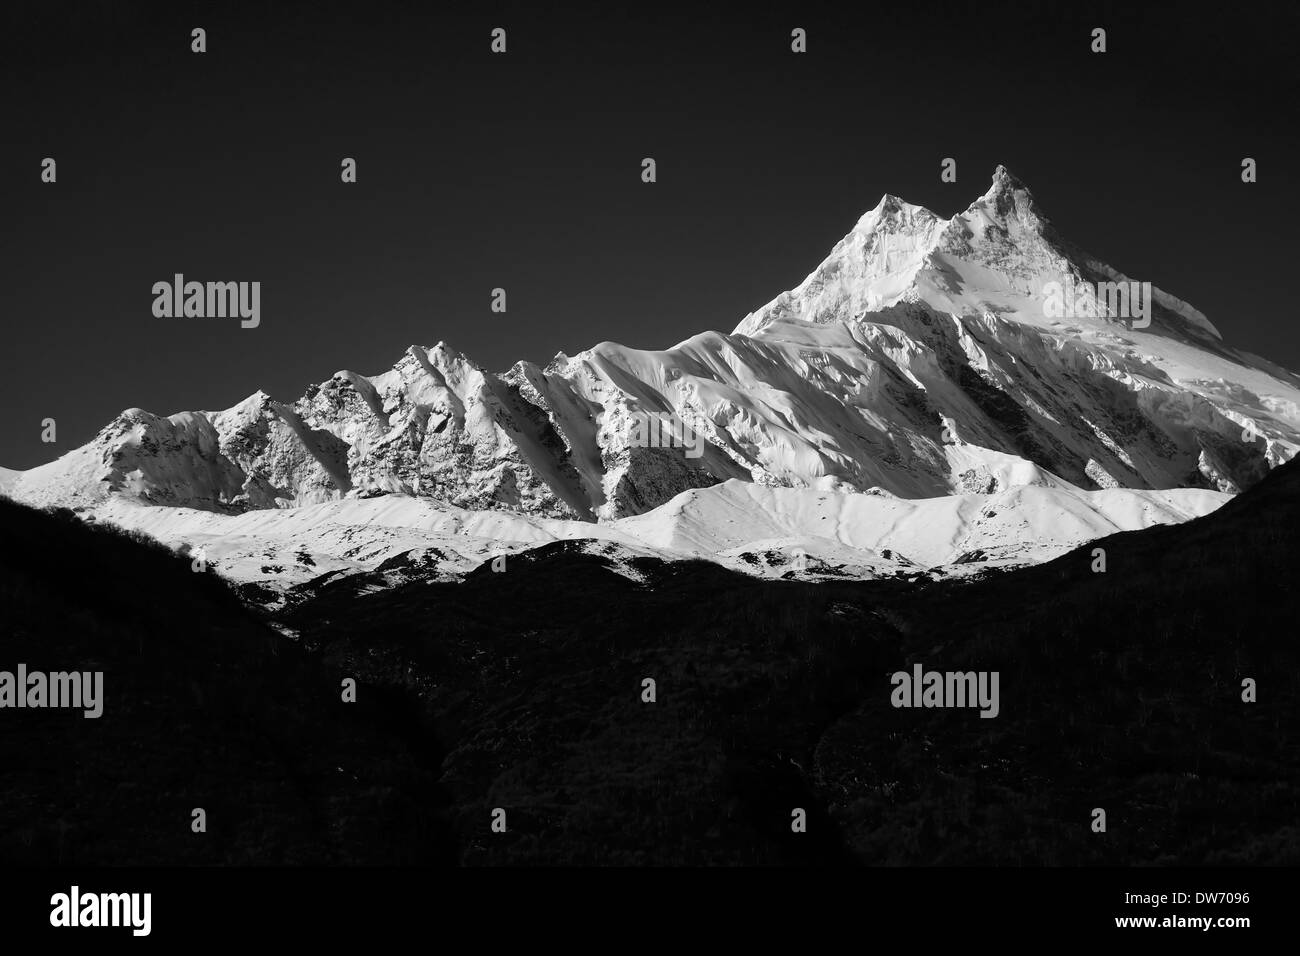 Manaslu, at 8156 meters (26,759 feet) high is the eighth highest peak on the planet. Stock Photo